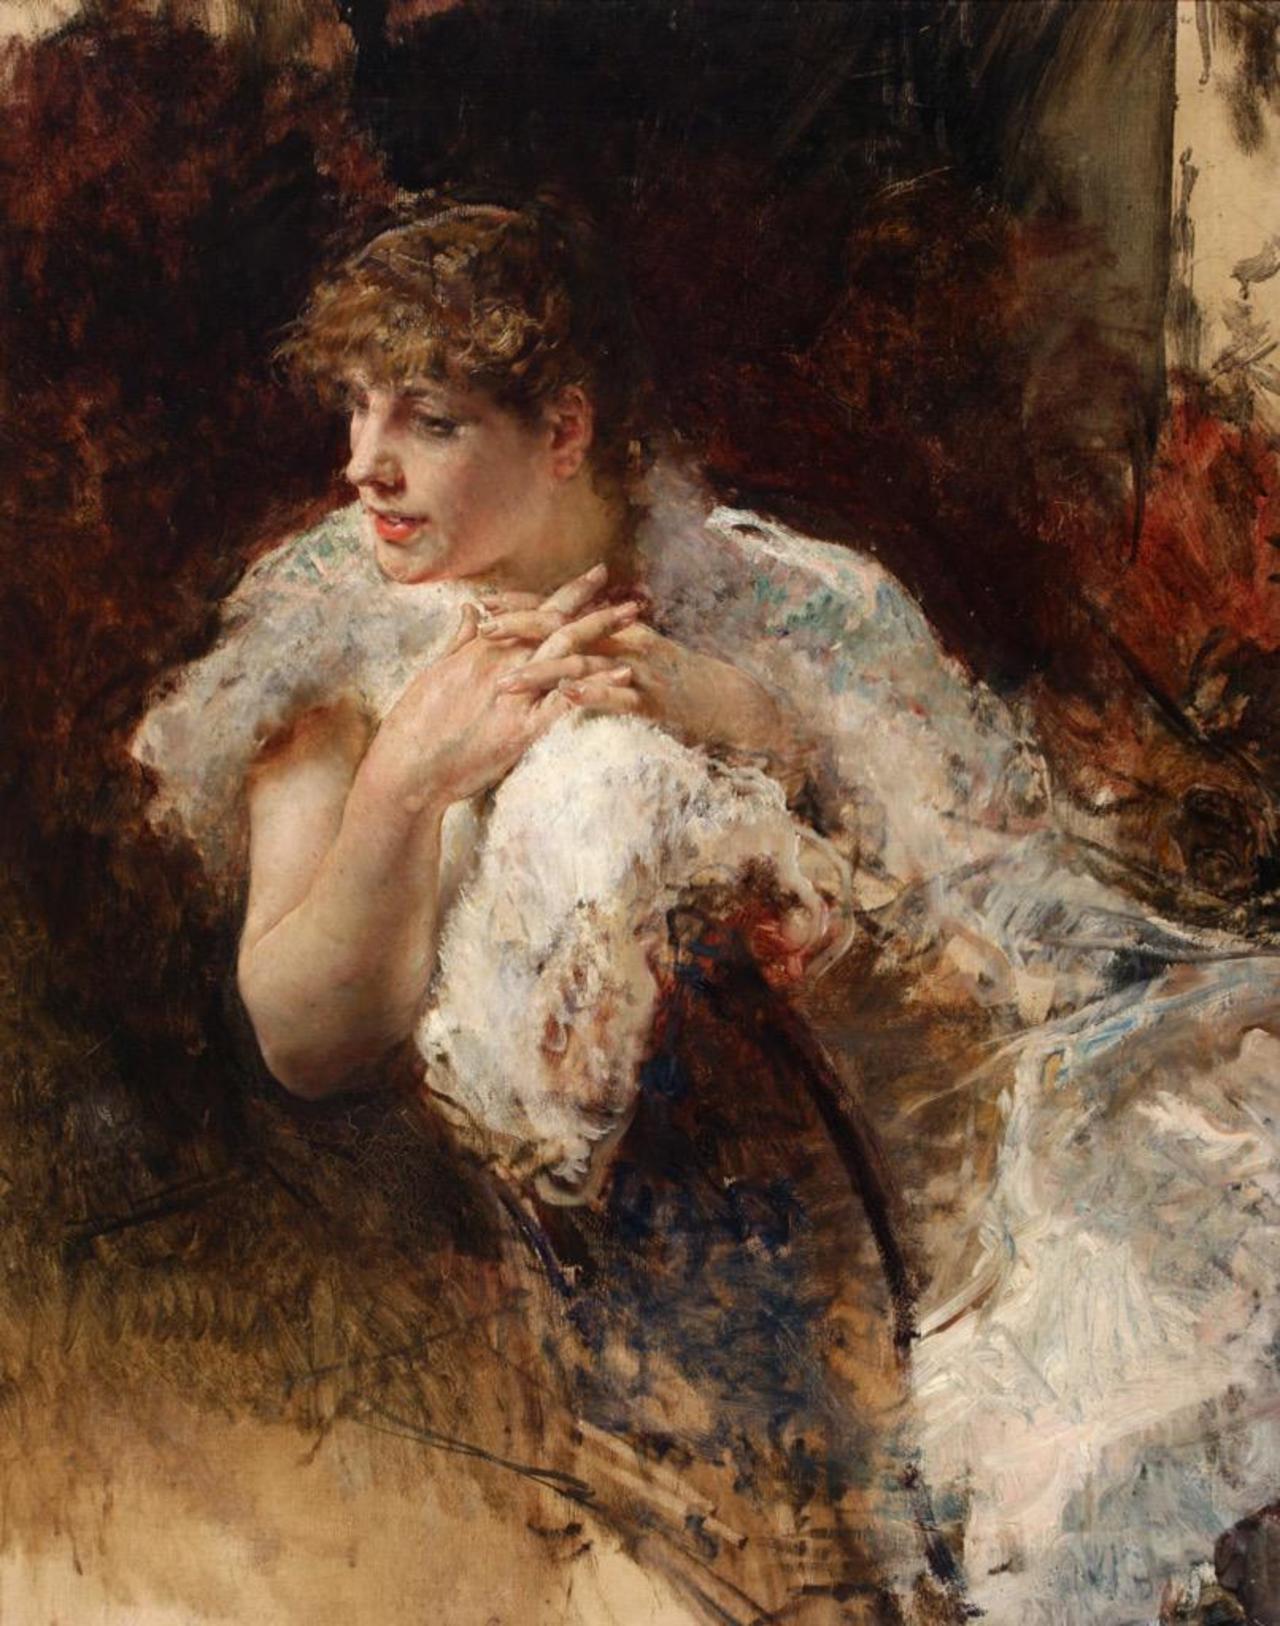 #Impressionism #DonneEMacchiaioli #ArtLovers 

Giuseppe de Nittis
A Lady from Naples,1874

@alecoscino @Brisighella81 http://t.co/9P5wzpmas4